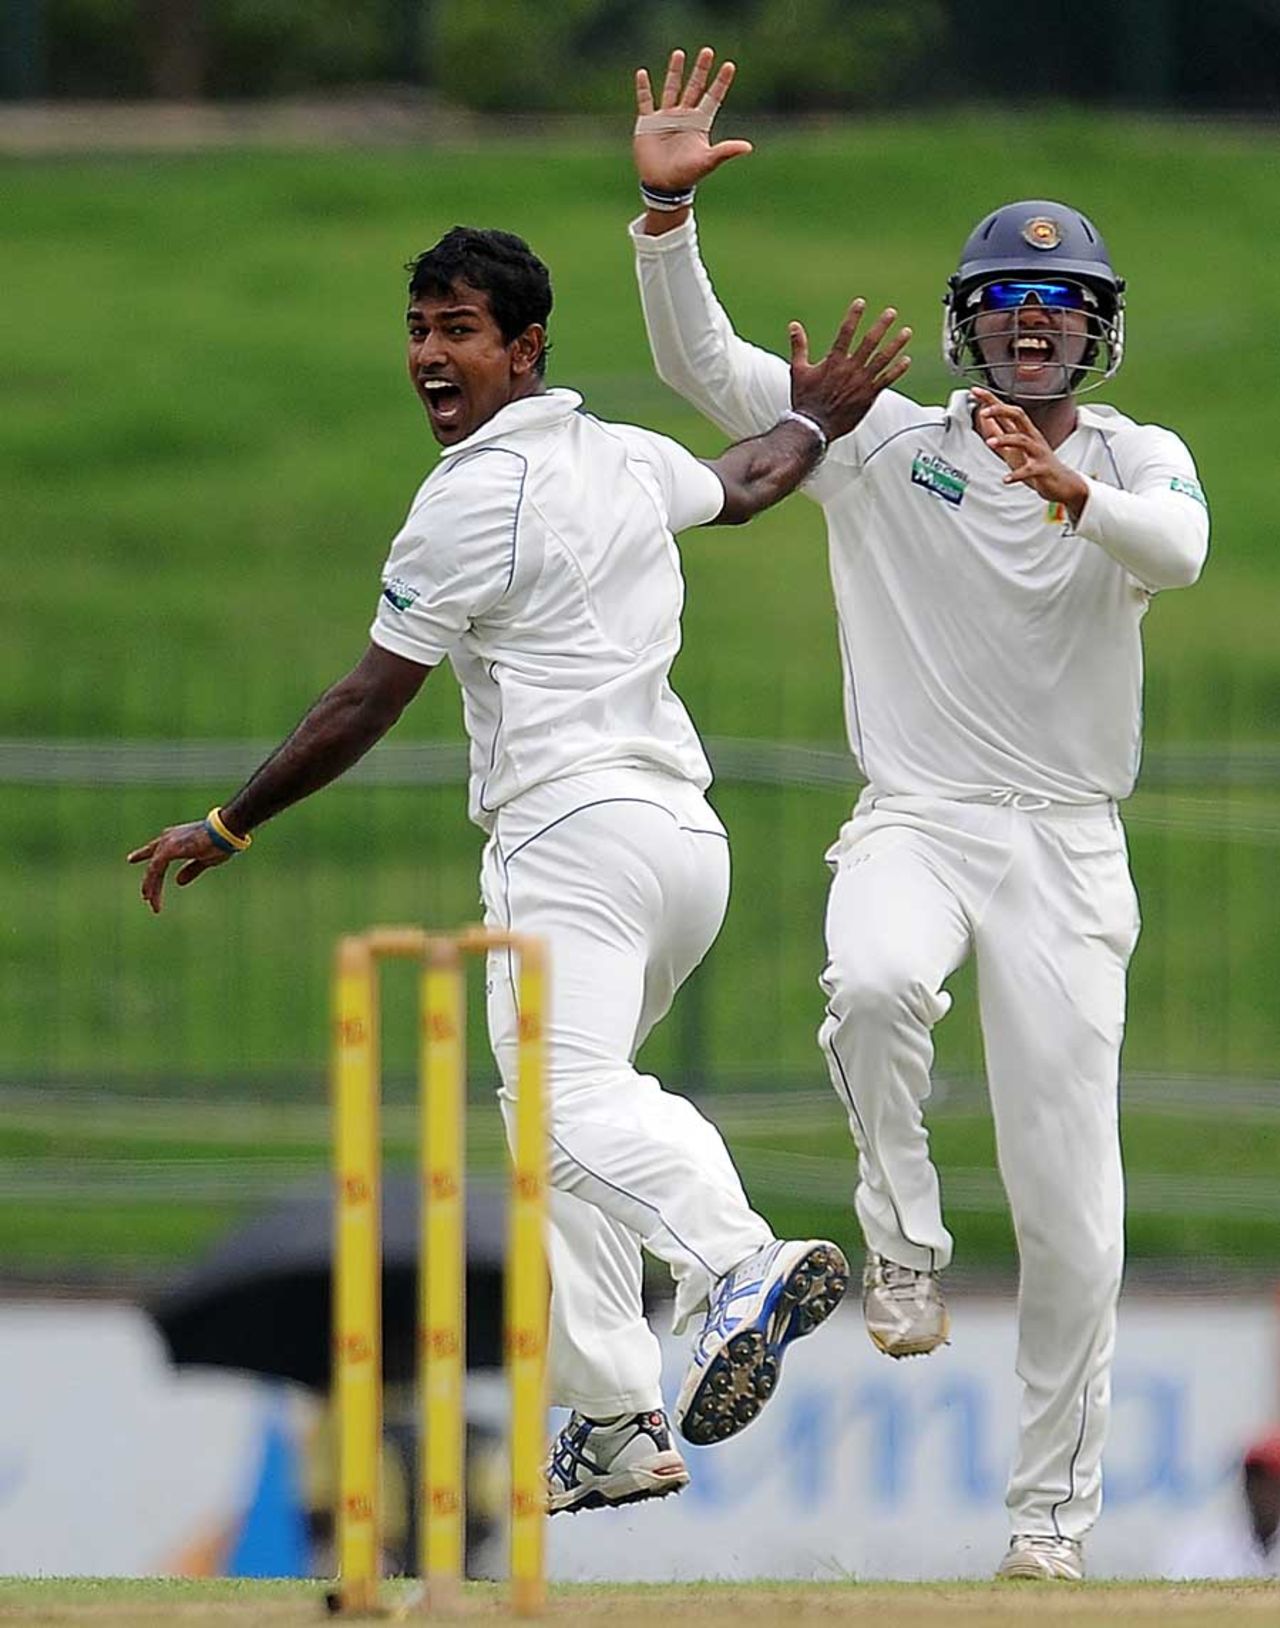 Nuwan Kulasekara got rid of Younis Khan, Sri Lanka v Pakistan, 3rd Test, Pallekele, 1st day, July 8, 2012